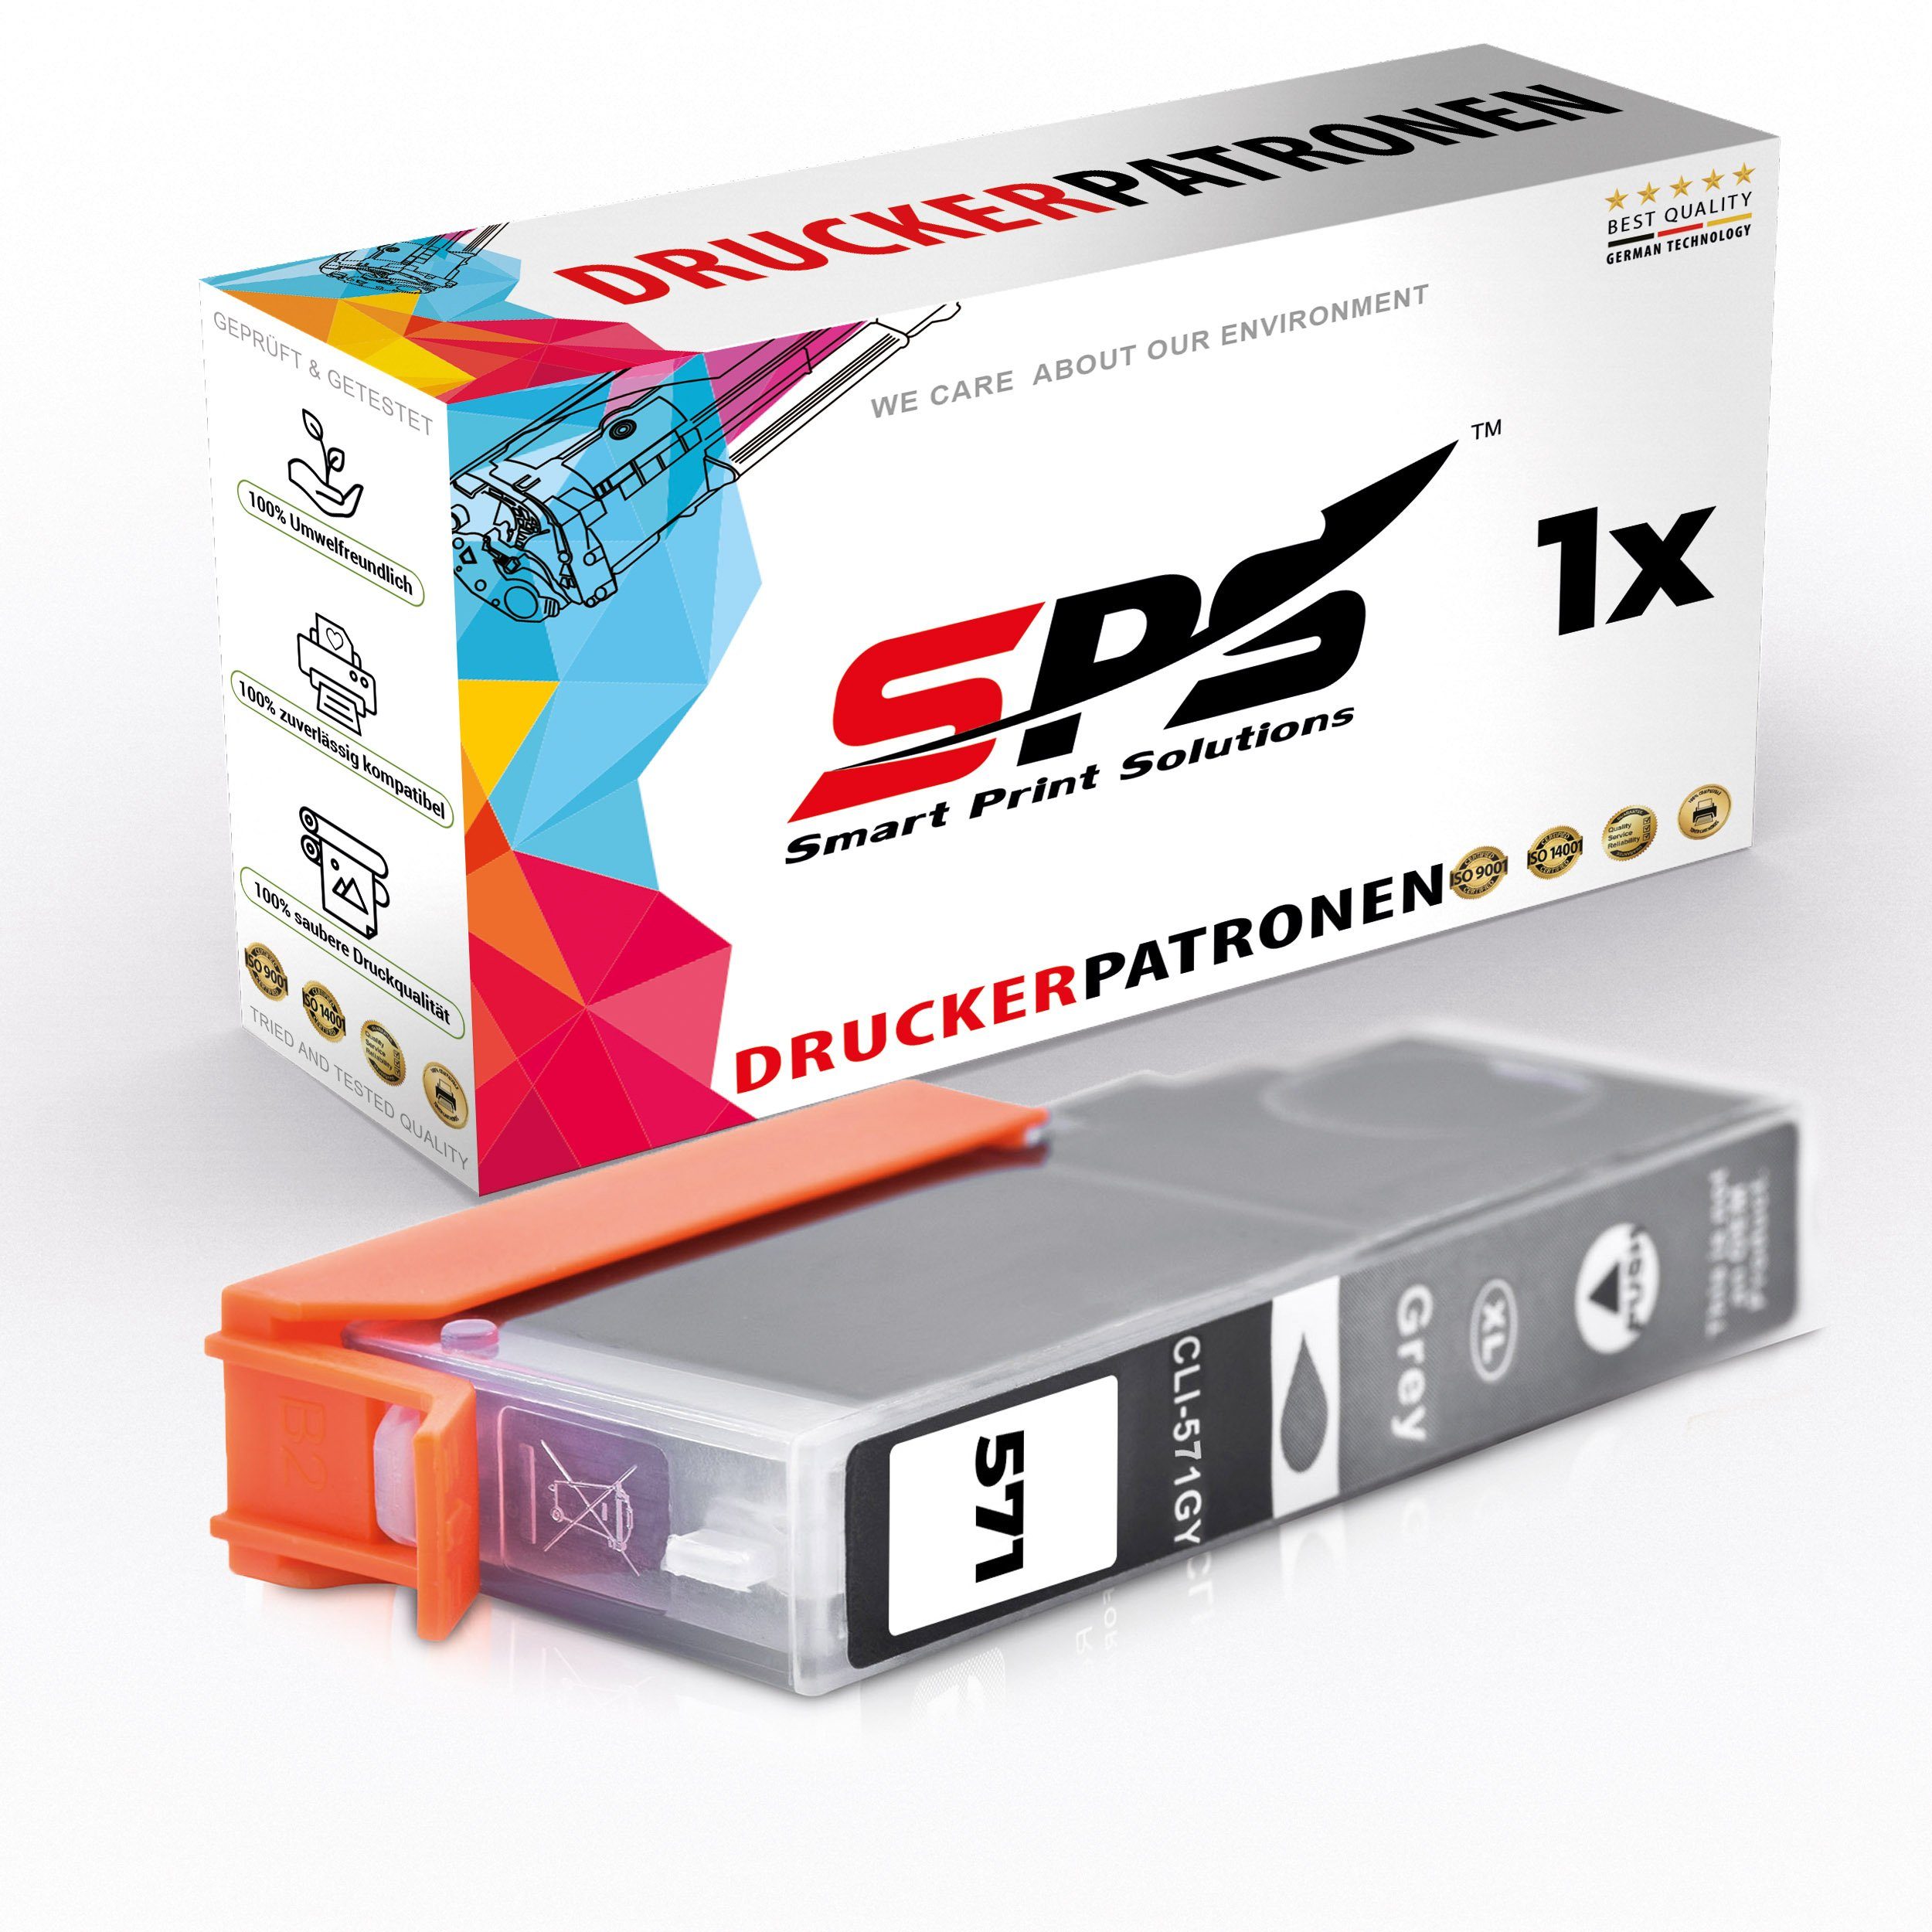 SPS Kompatibel für Canon Pixma TS8050 (1369C089) 0335C Tintenpatrone (1er Pack)